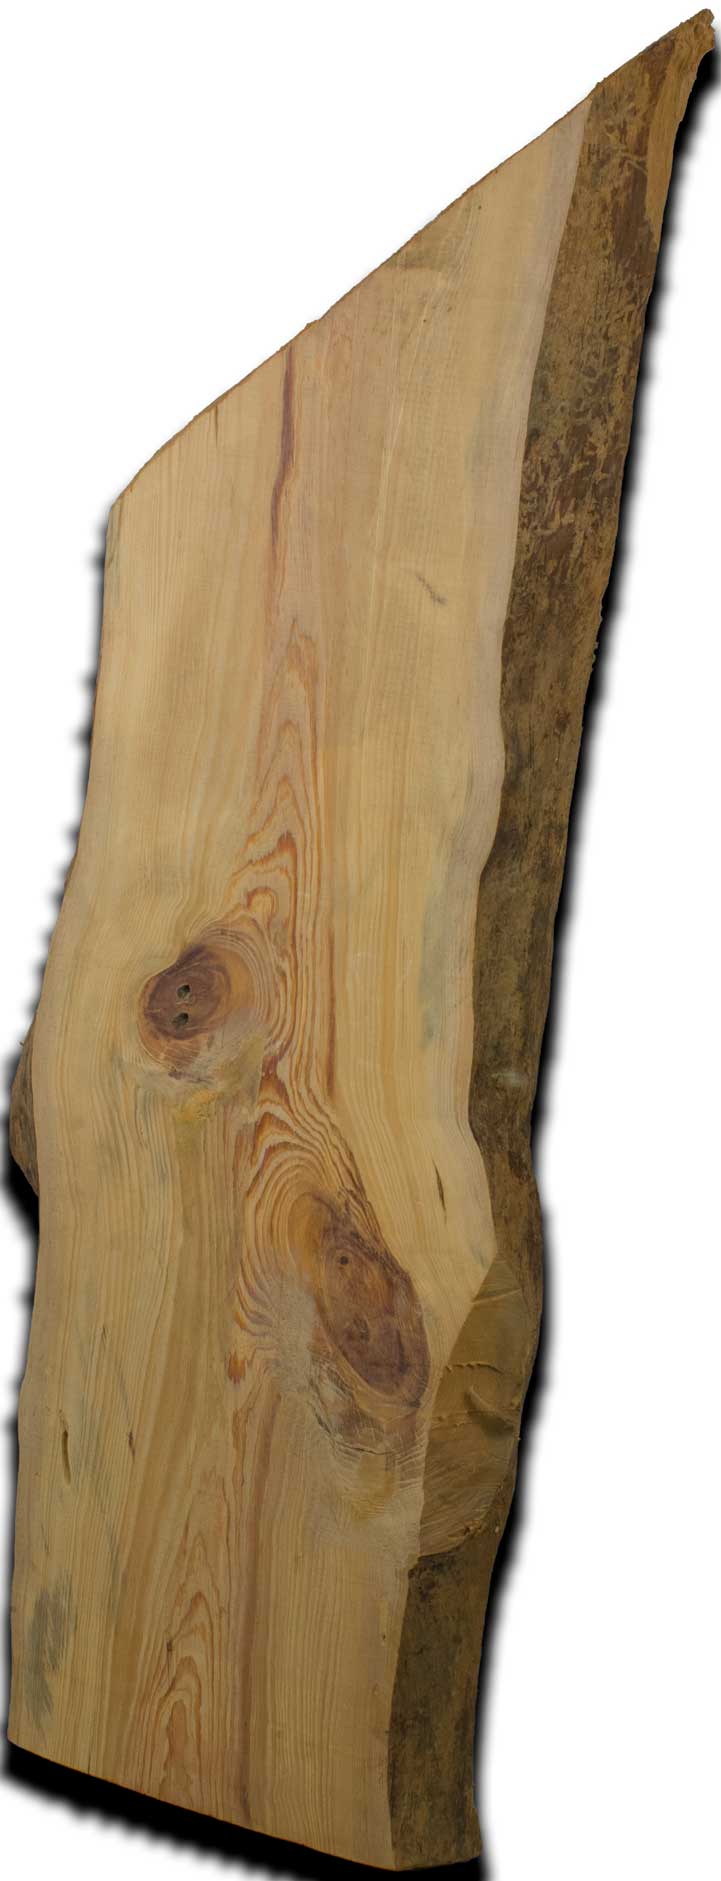 Dade County Pine Live Edge Wood Slab 3 In. x 14 In. x 36 In. - VSHE3DCP1